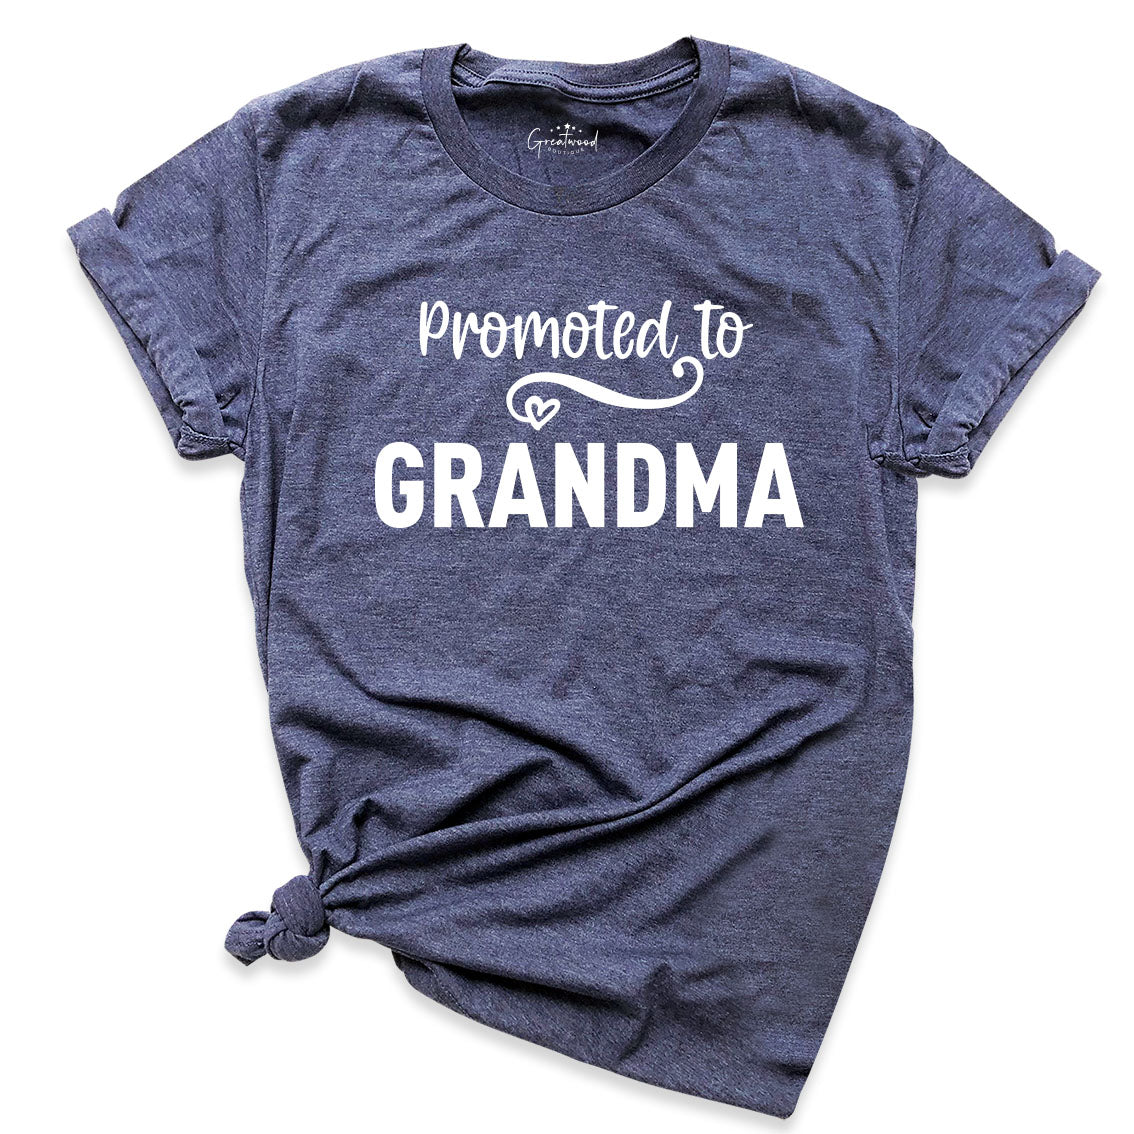 Promoted to Grandma Shirt